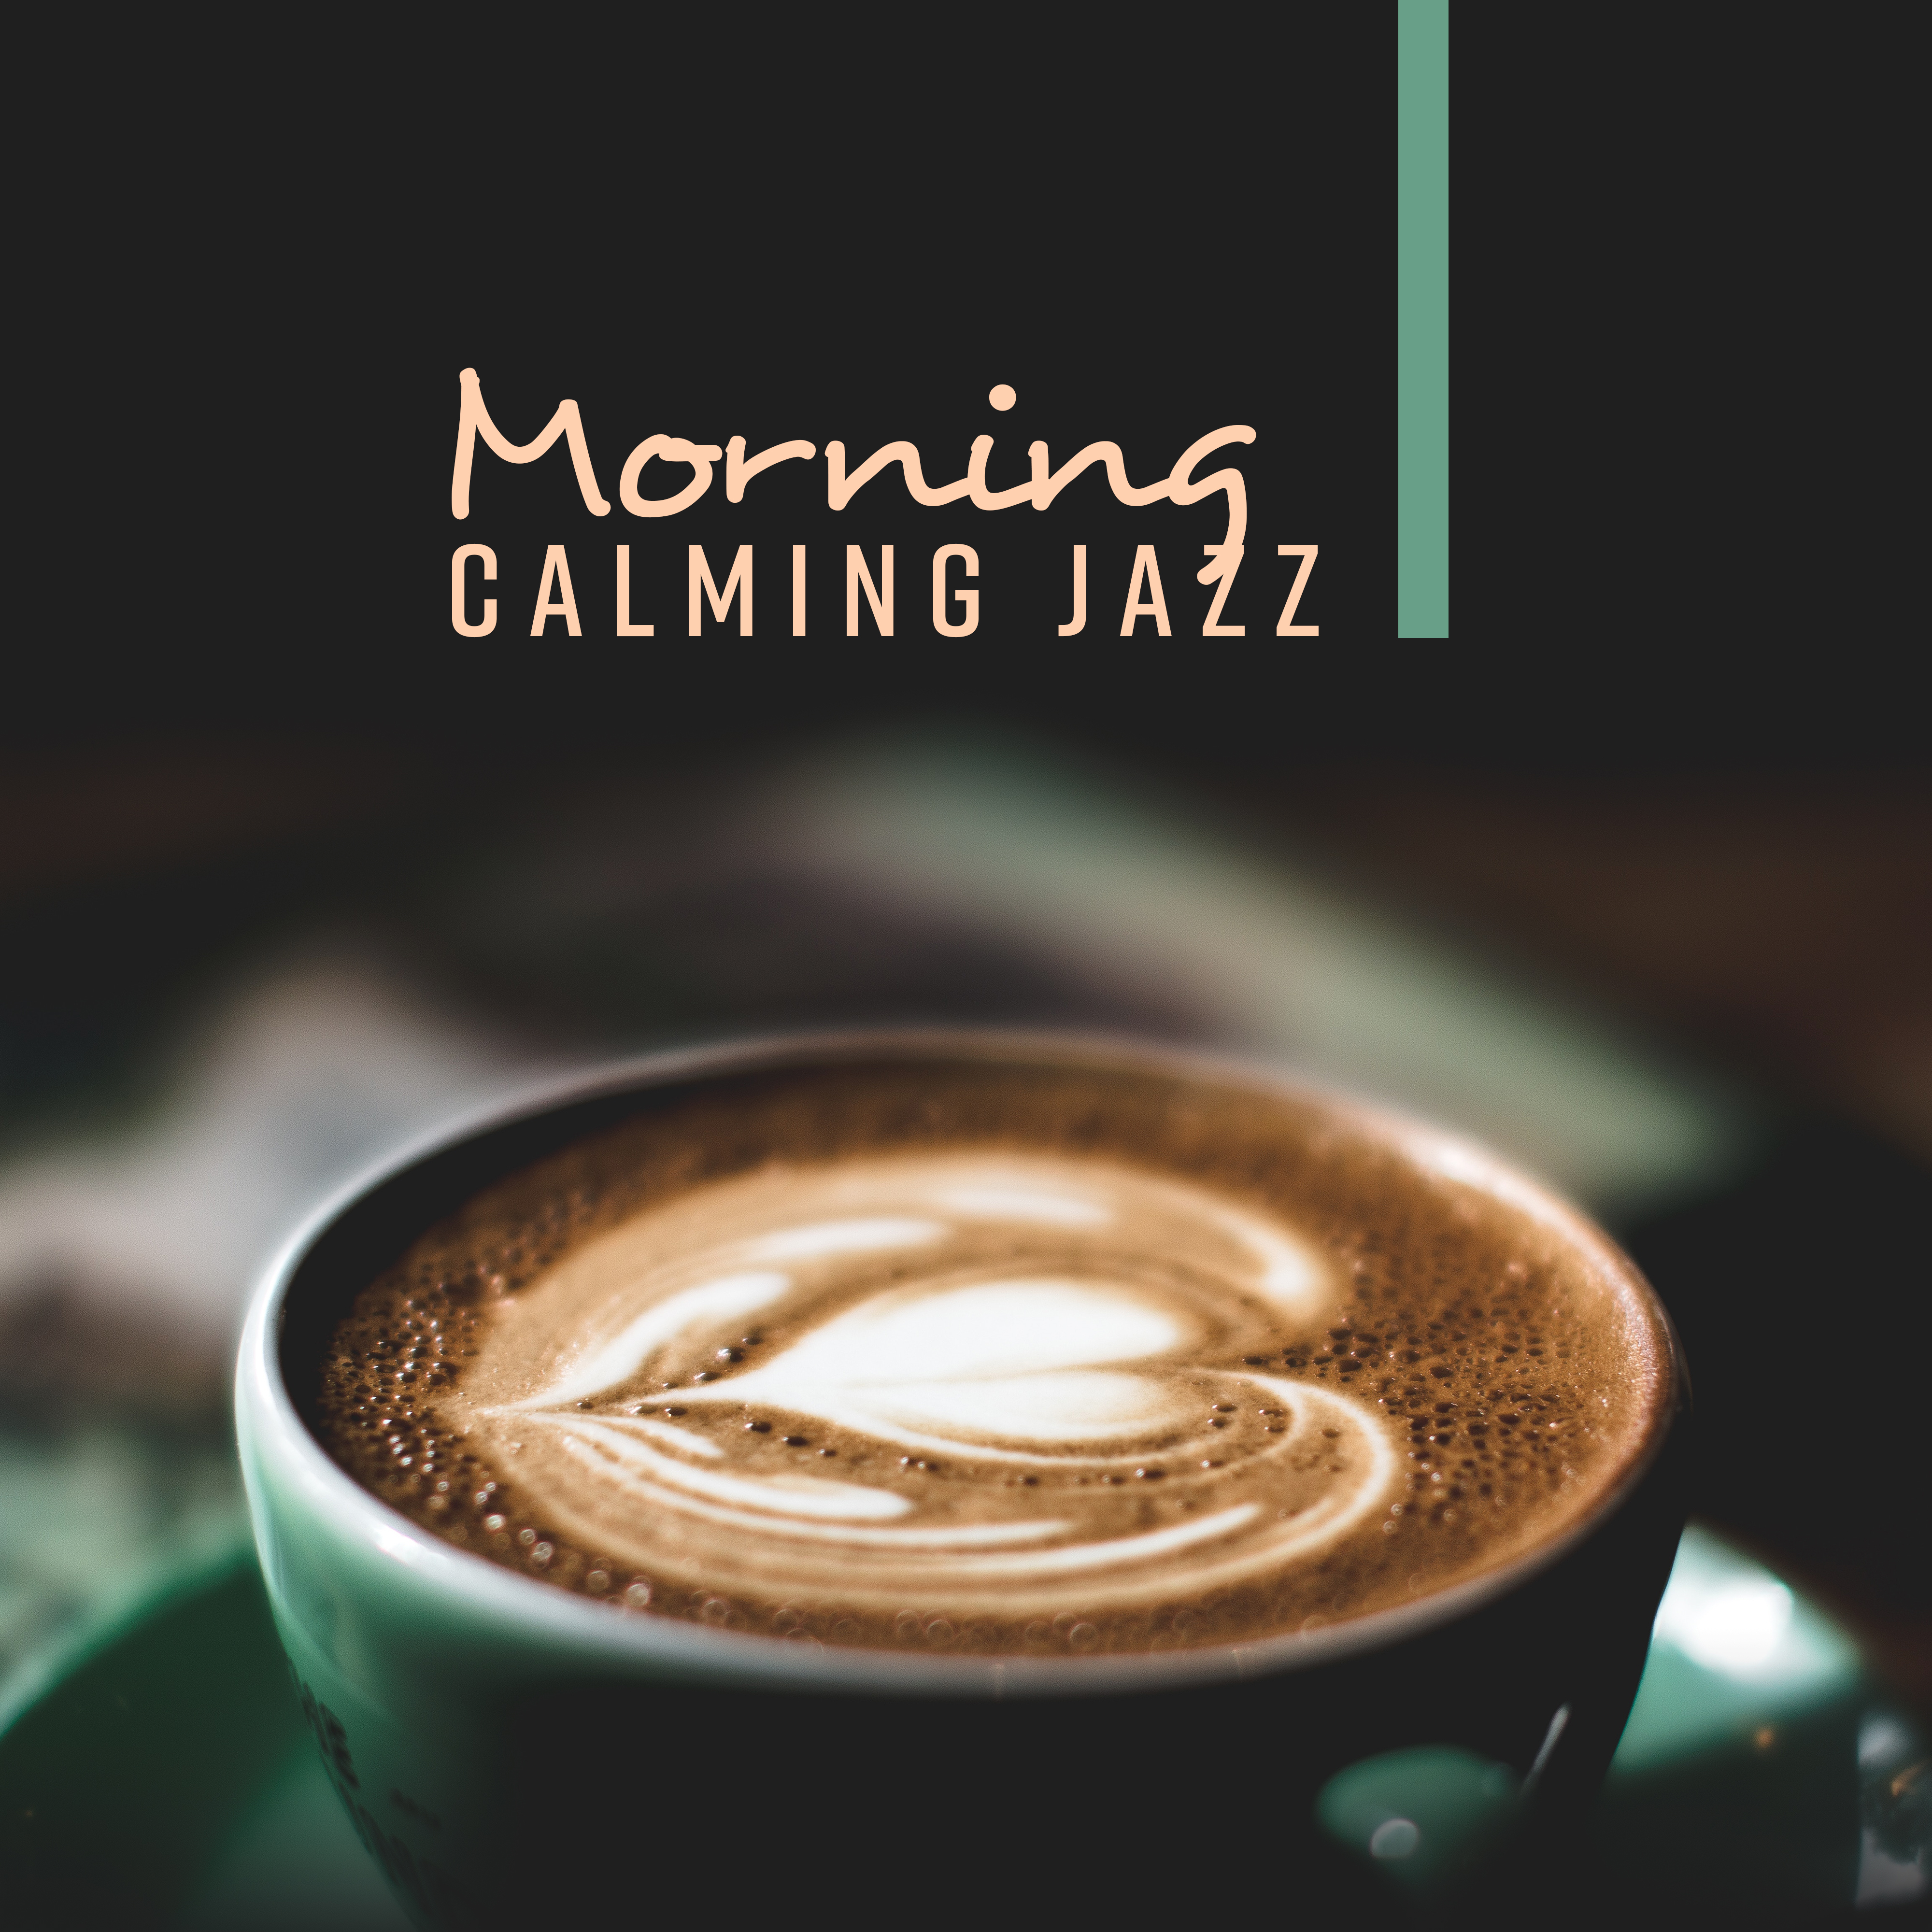 Morning Calming Jazz